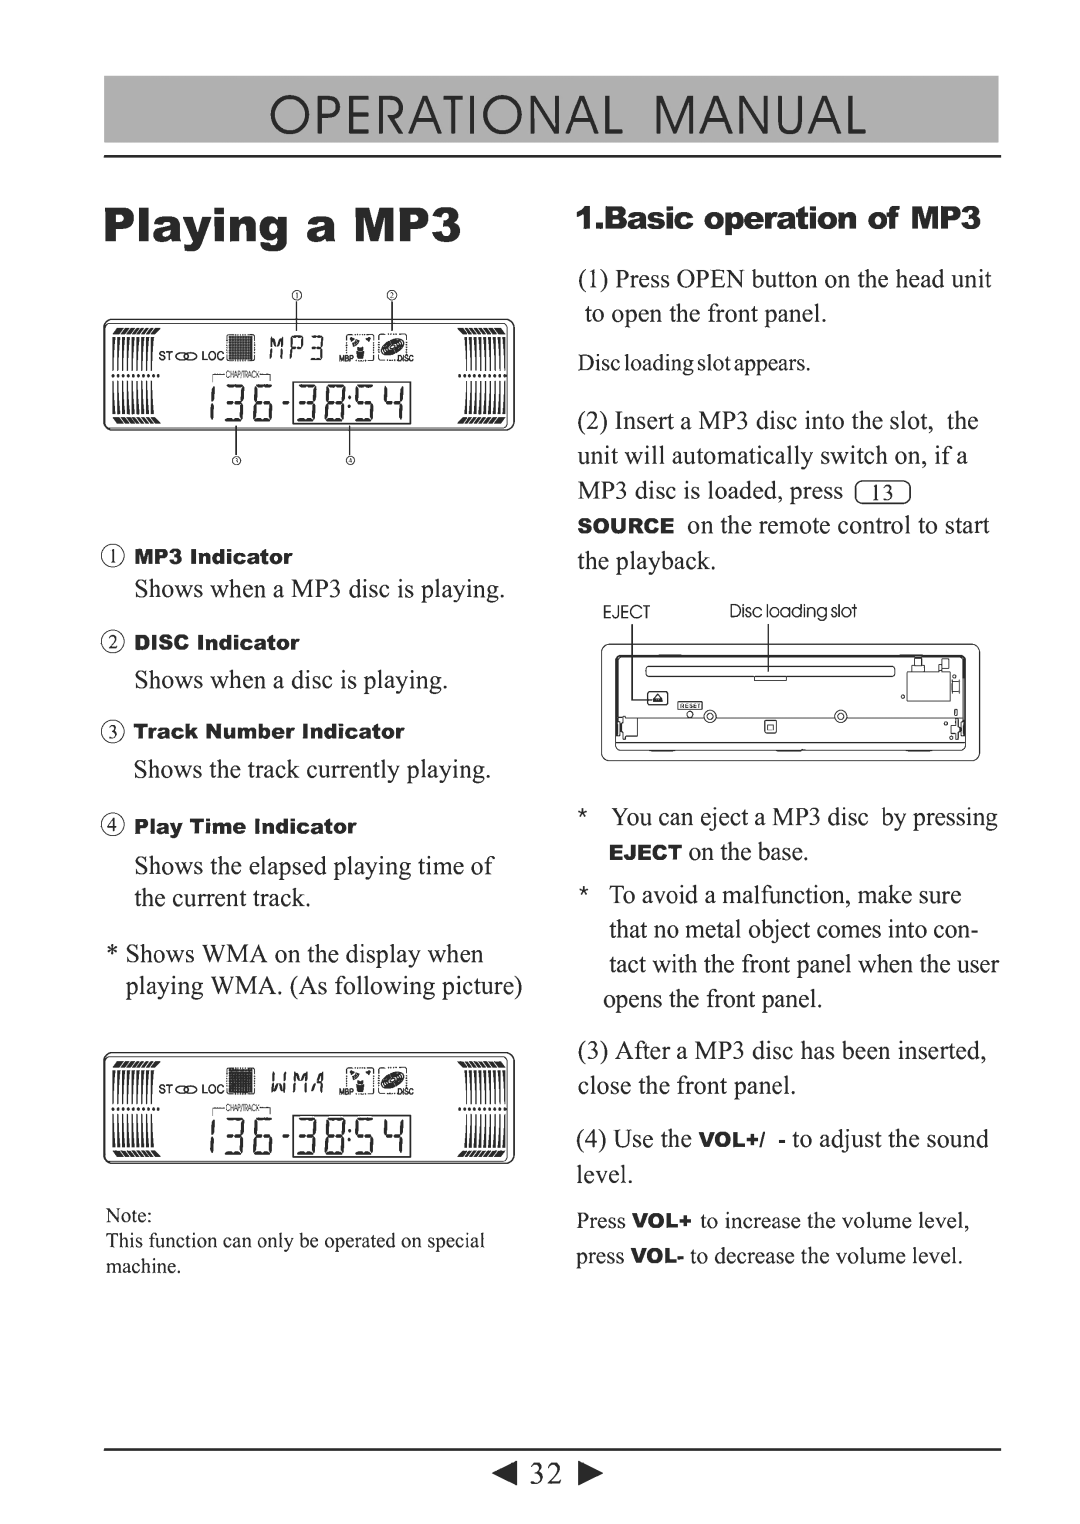 PYLE Audio 189 manual 